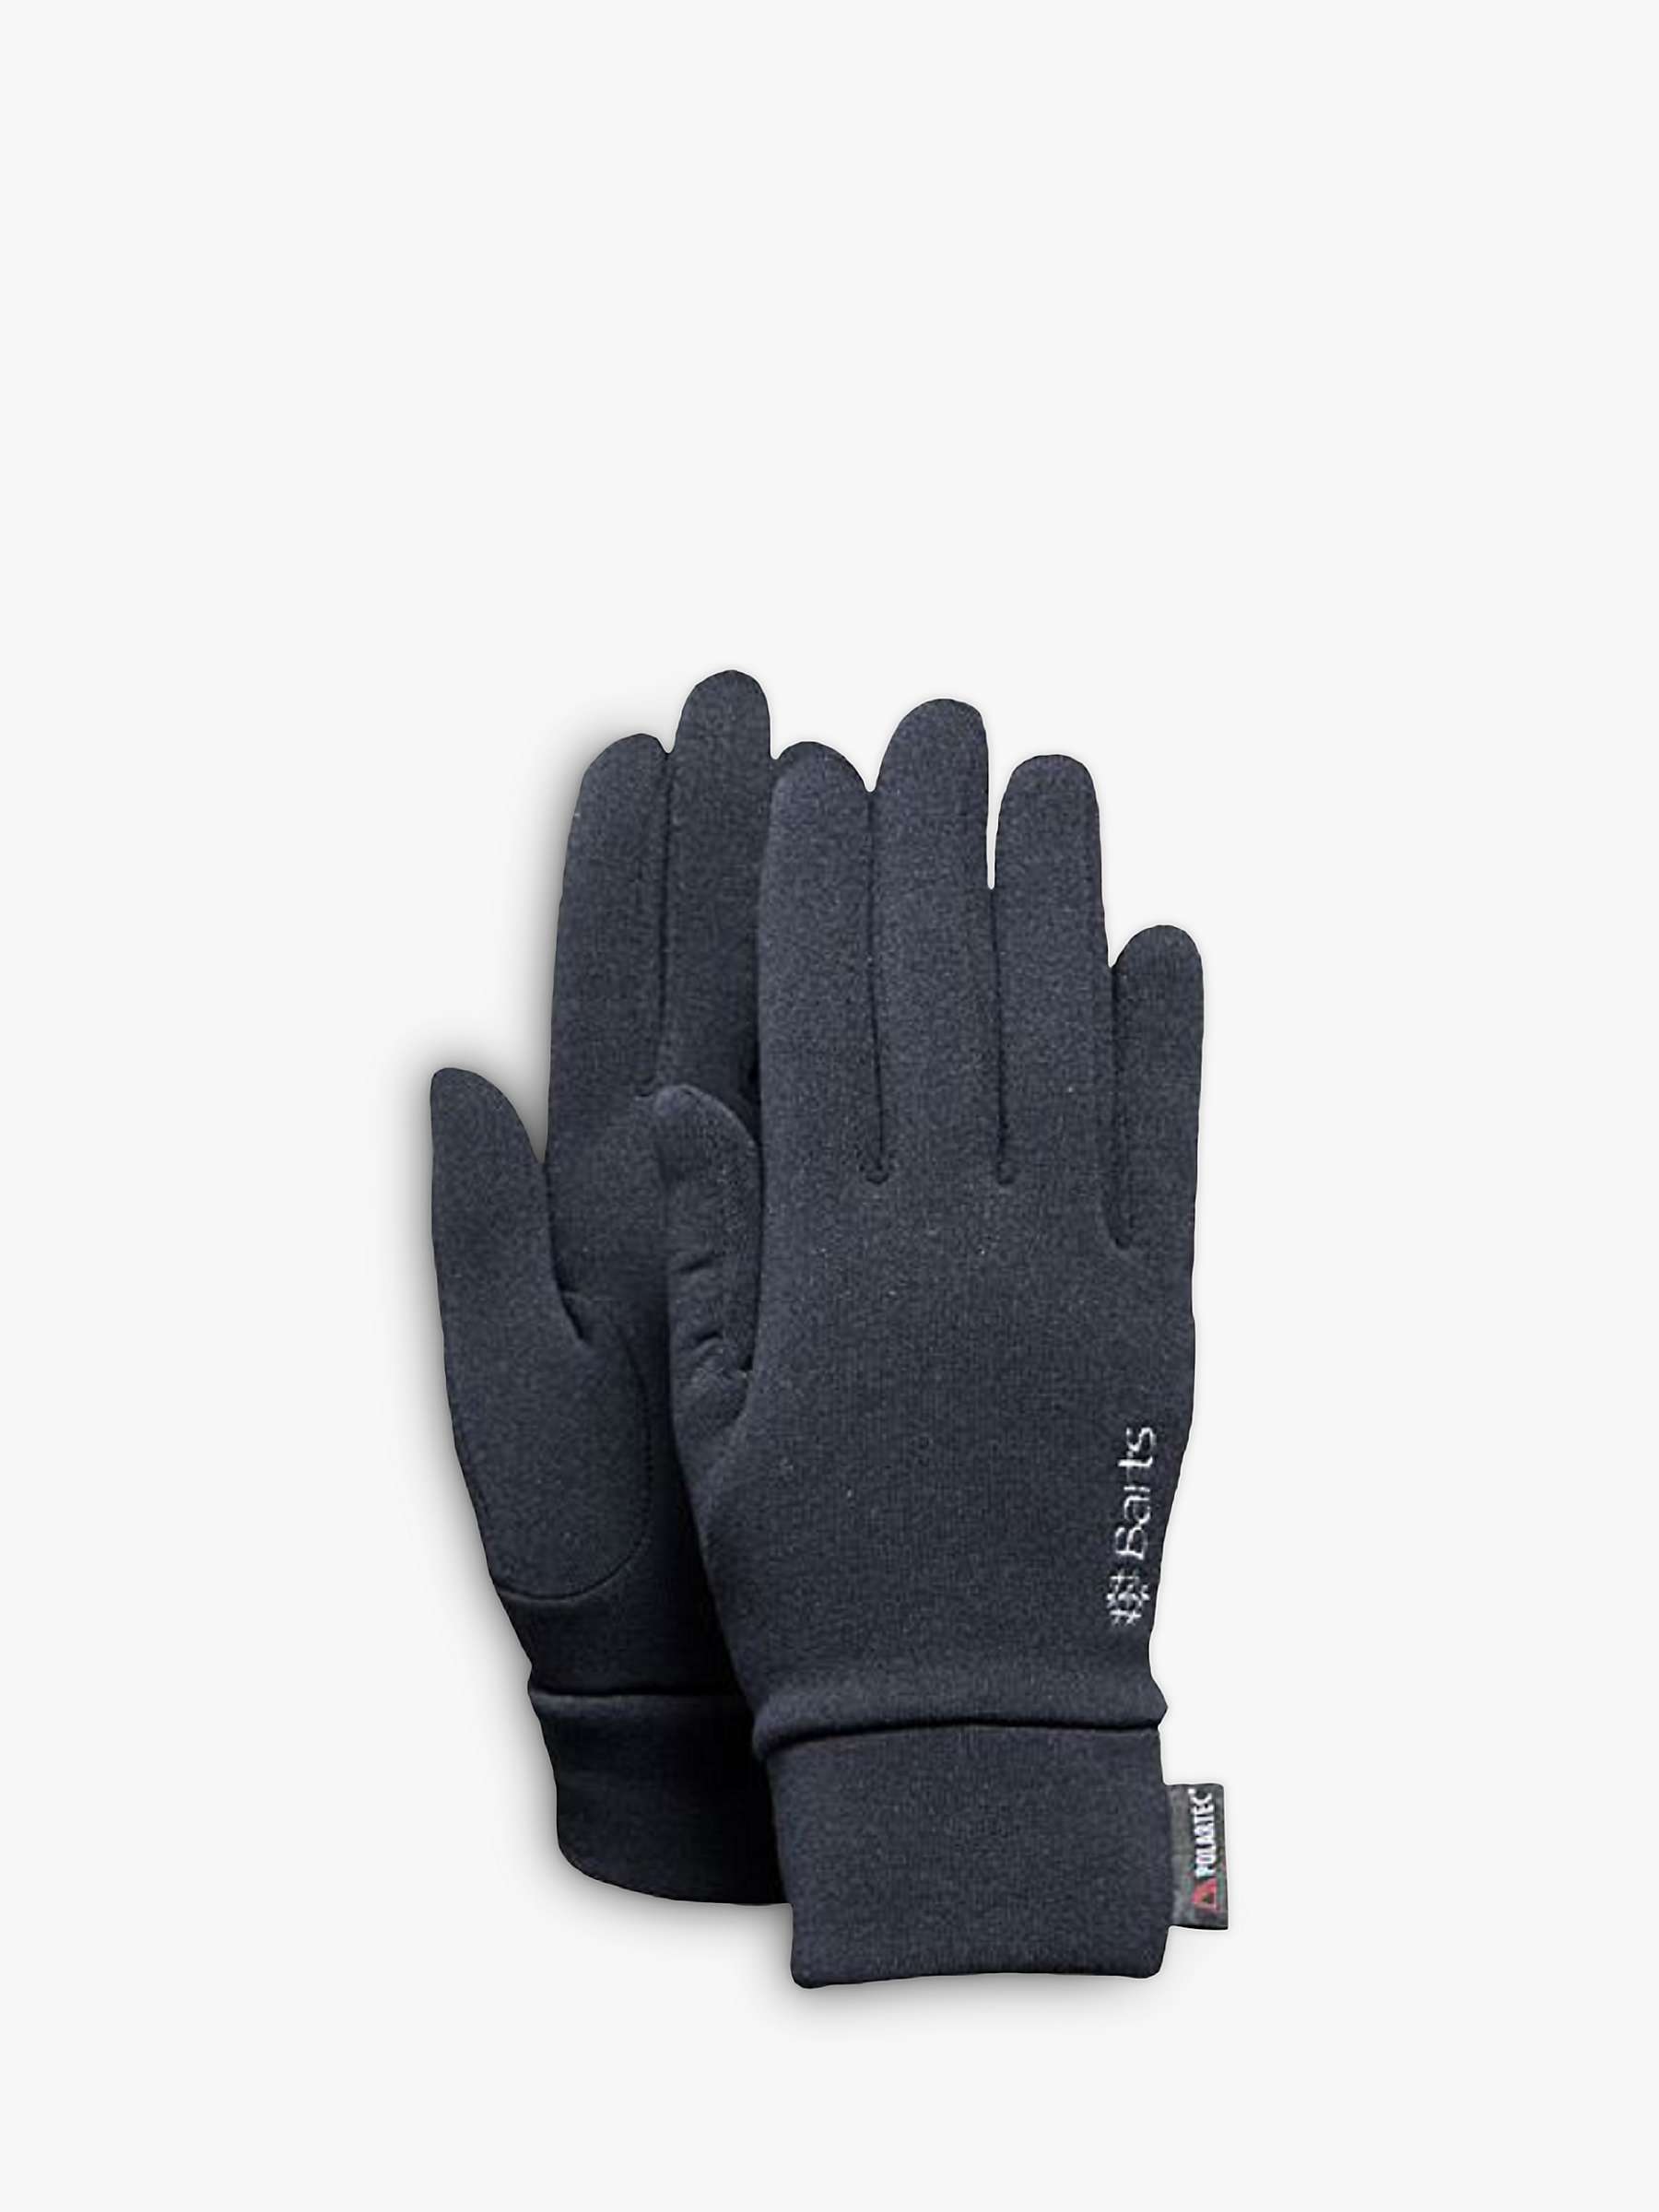 Buy Barts Powerstretch Men's Gloves, Black Online at johnlewis.com